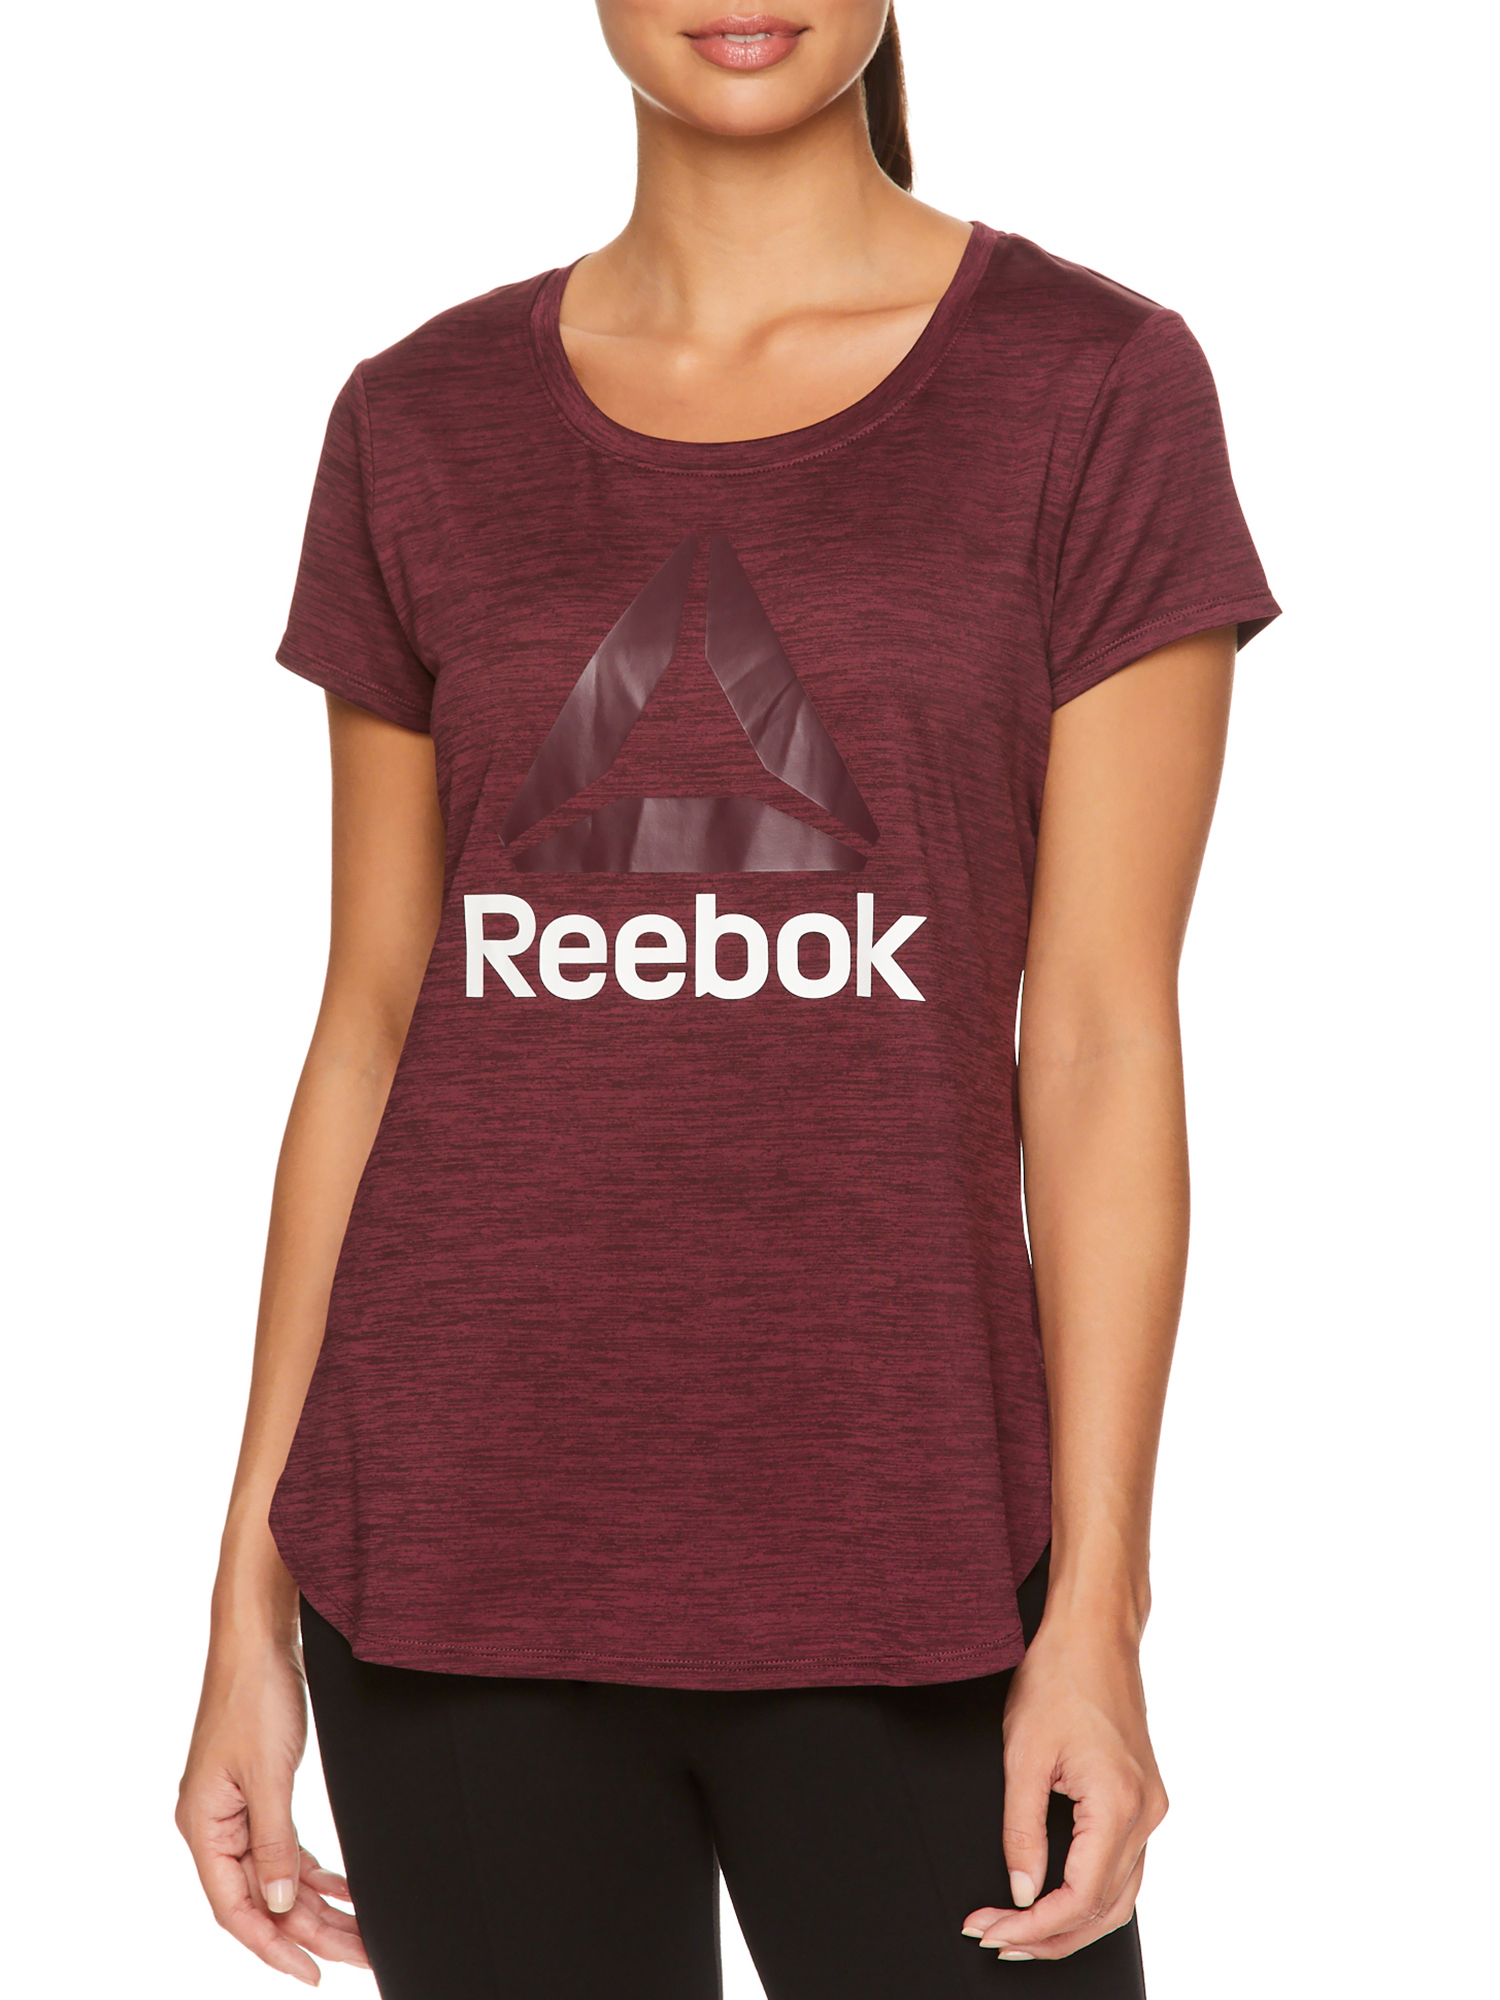 Reebok Womens Cap Sleeve Jersey Tee Shirt - image 1 of 4